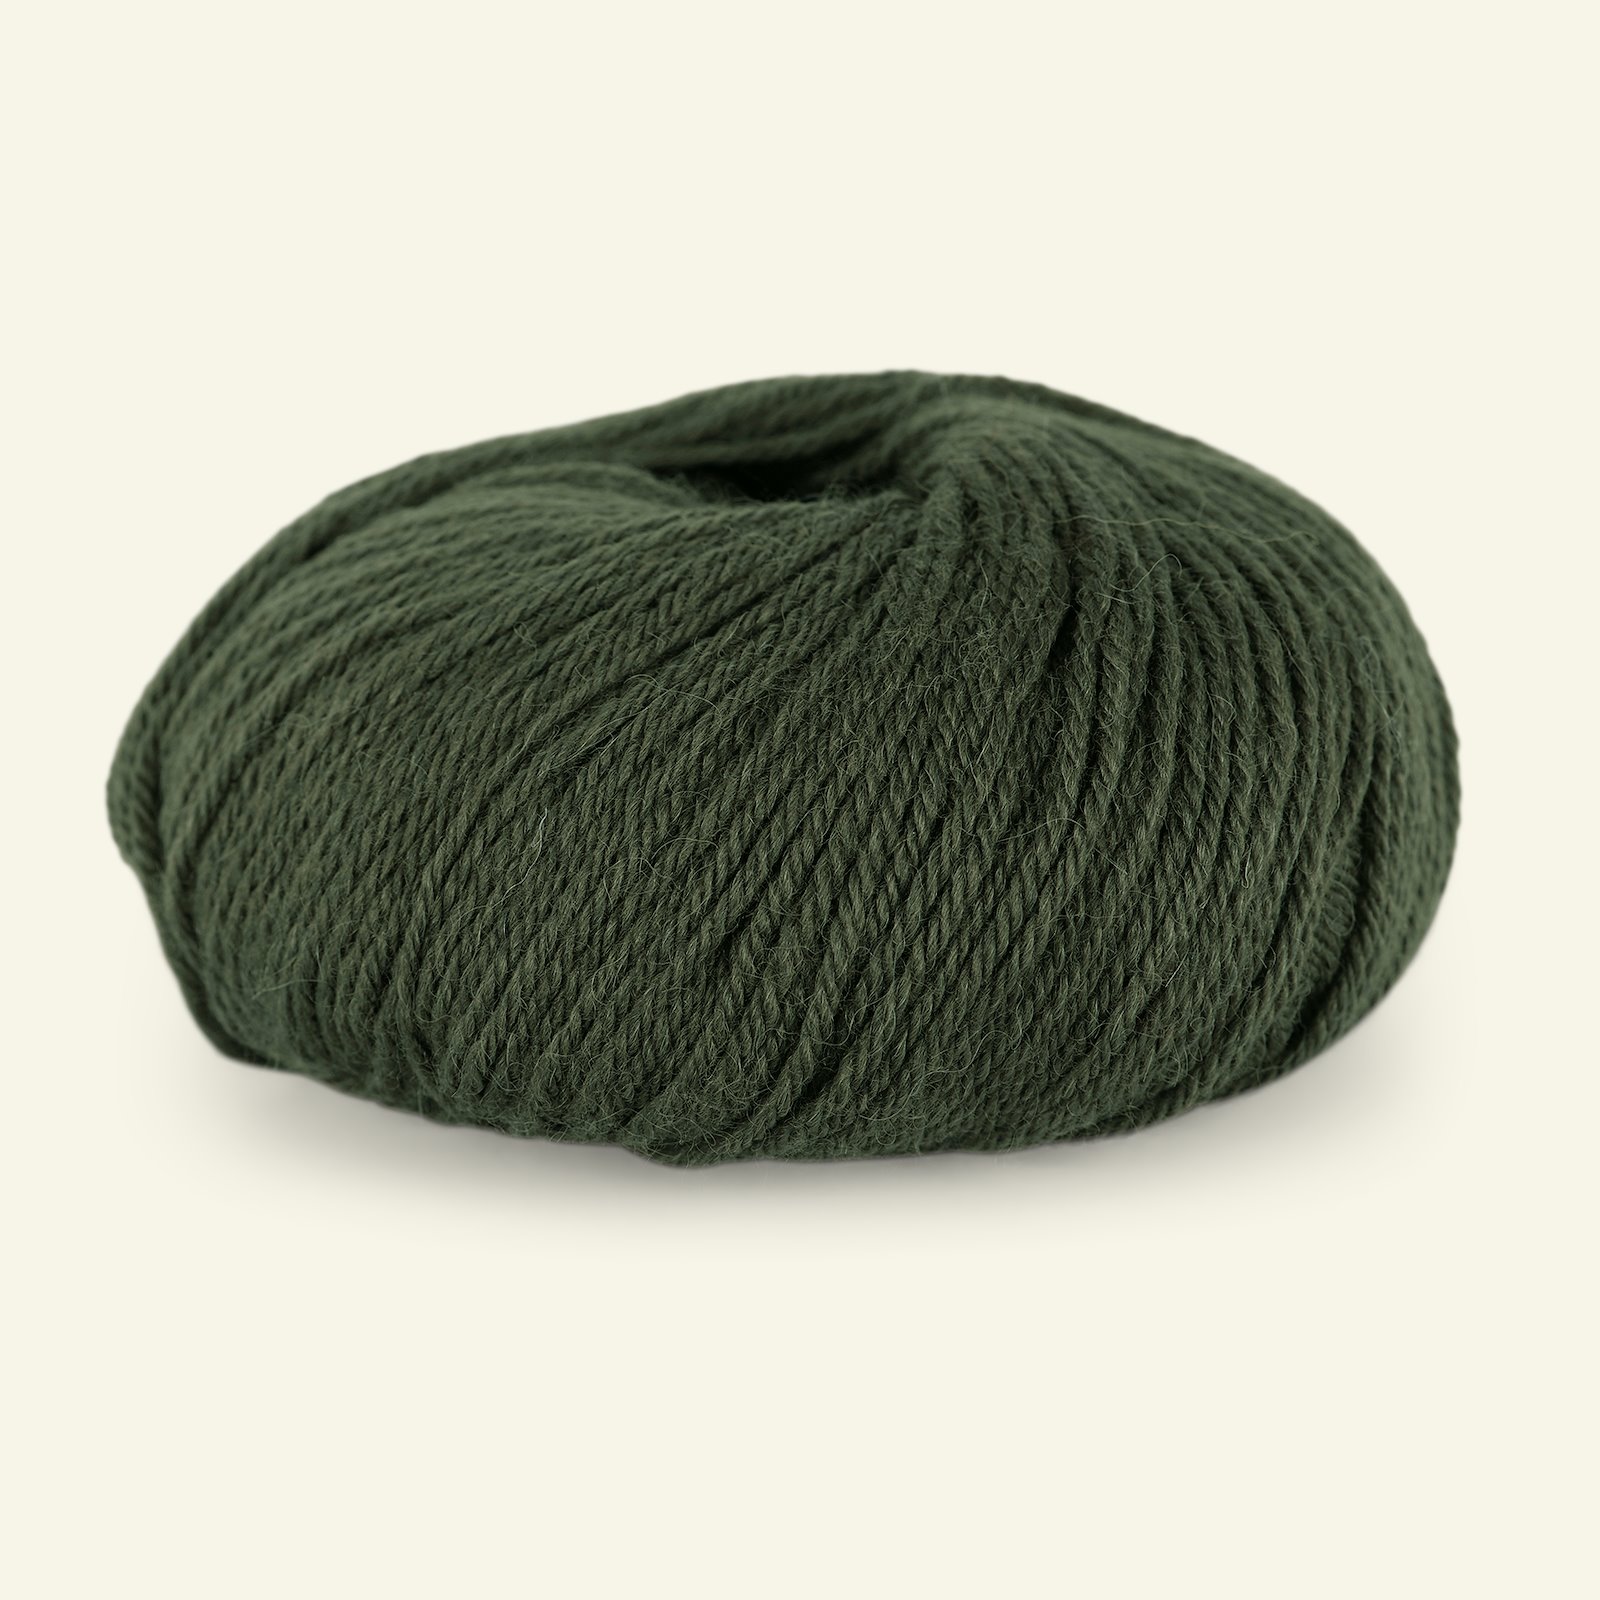 Du Store Alpakka, alpaca merino mixed yarn "Sterk", bottle green (860) 90000682_pack